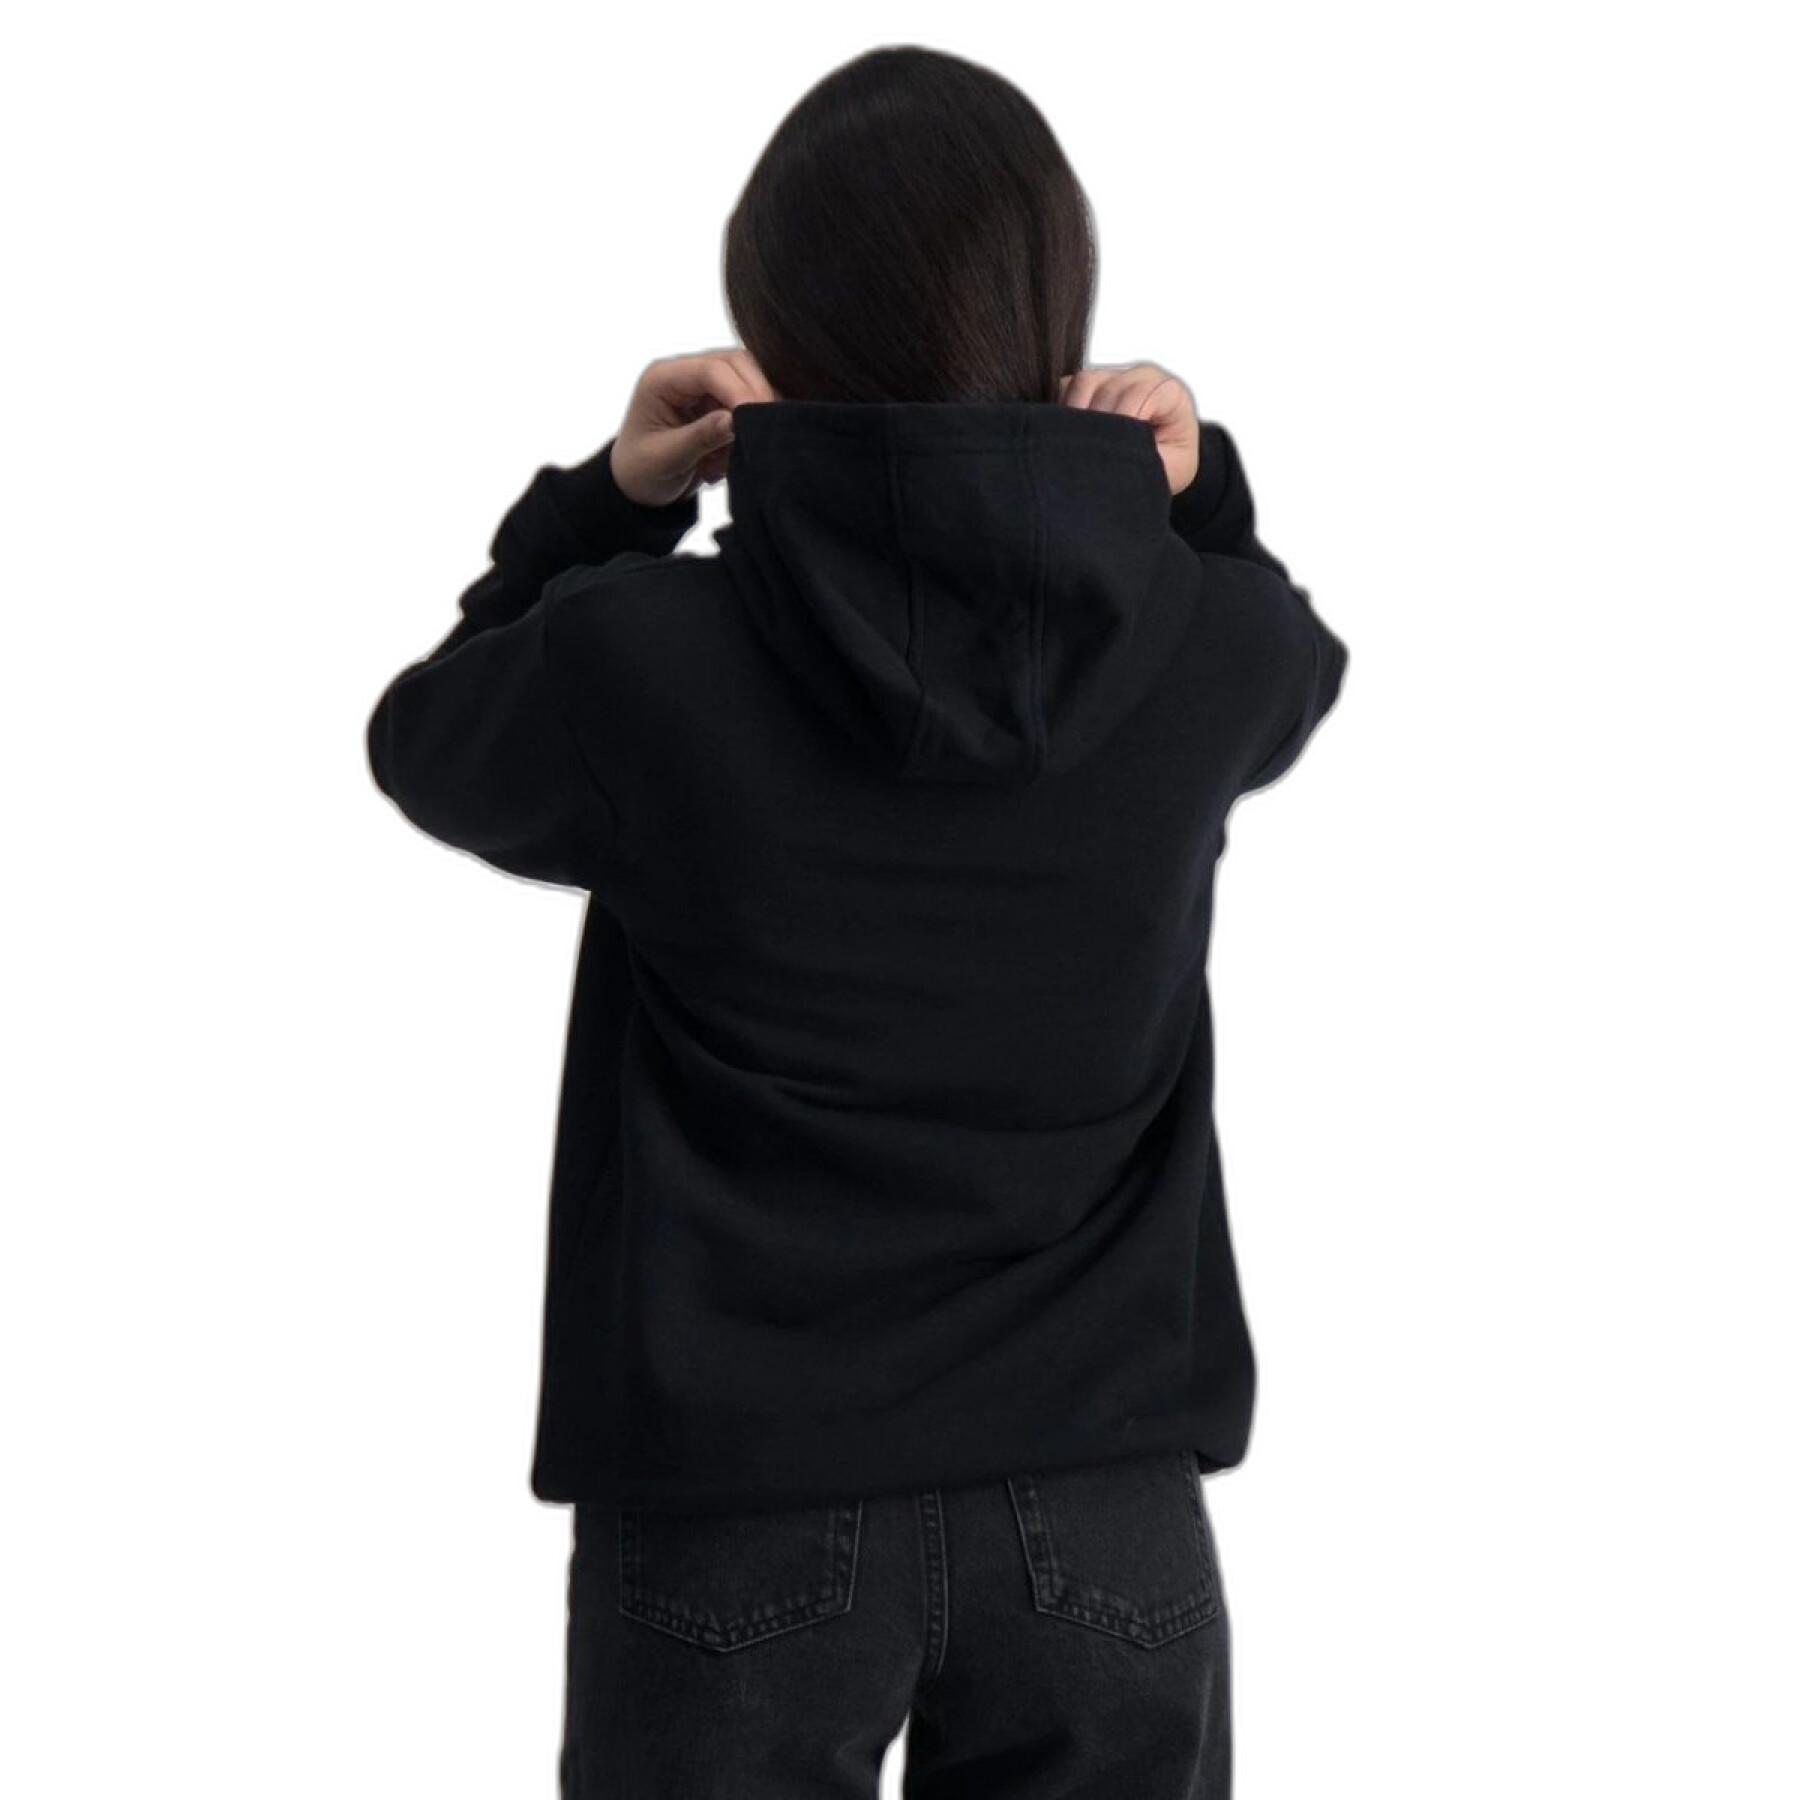 Hooded sweatshirt small logo child Fila Stole